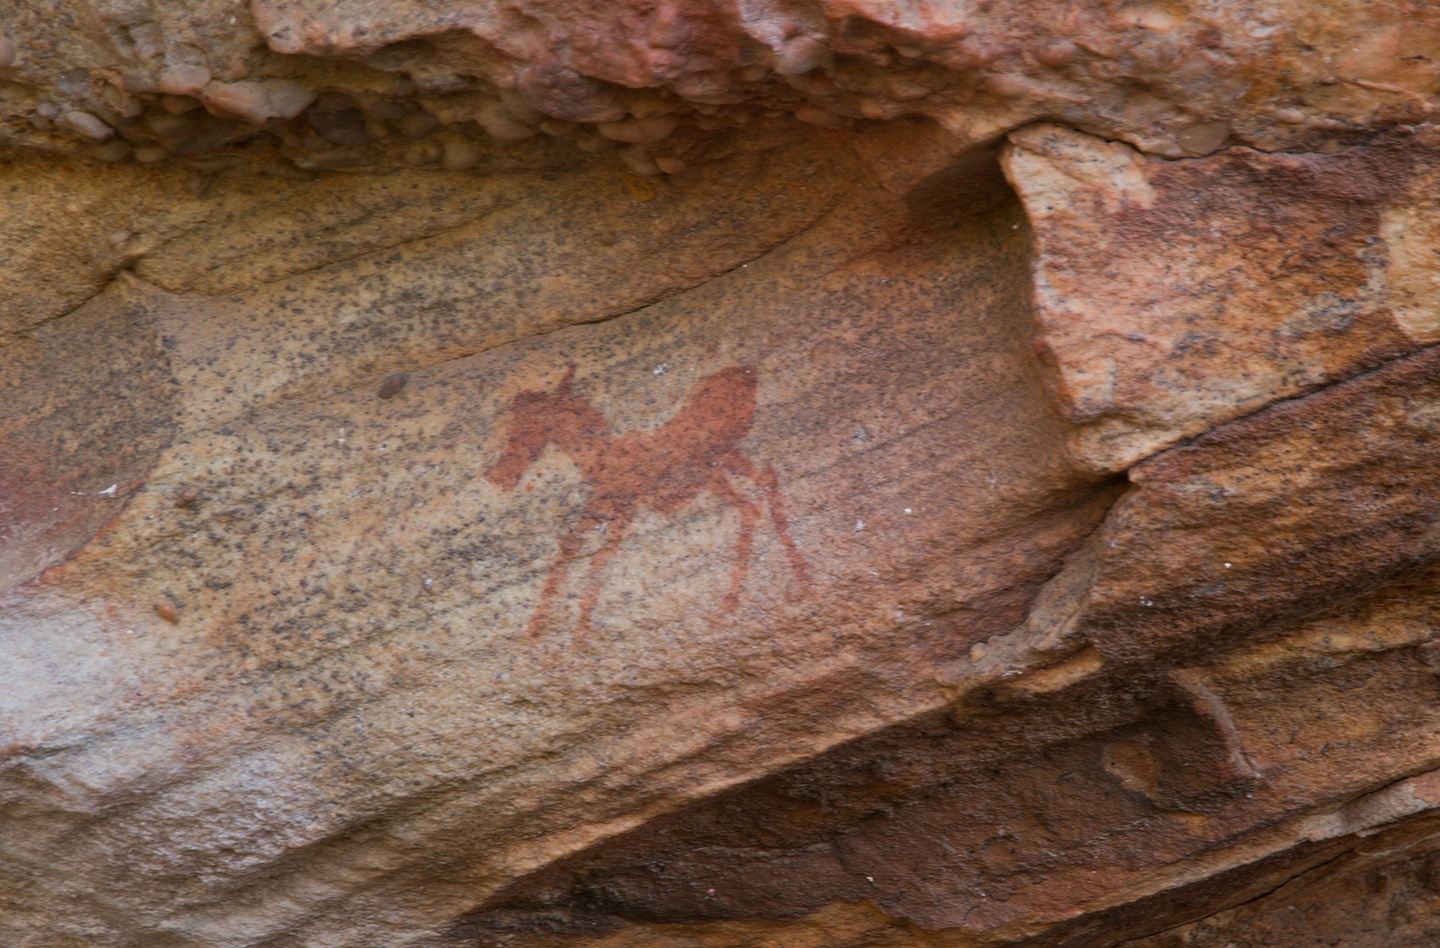 Stone-age San (Bushman) Rock Art  - a Day Trip from Cape Town